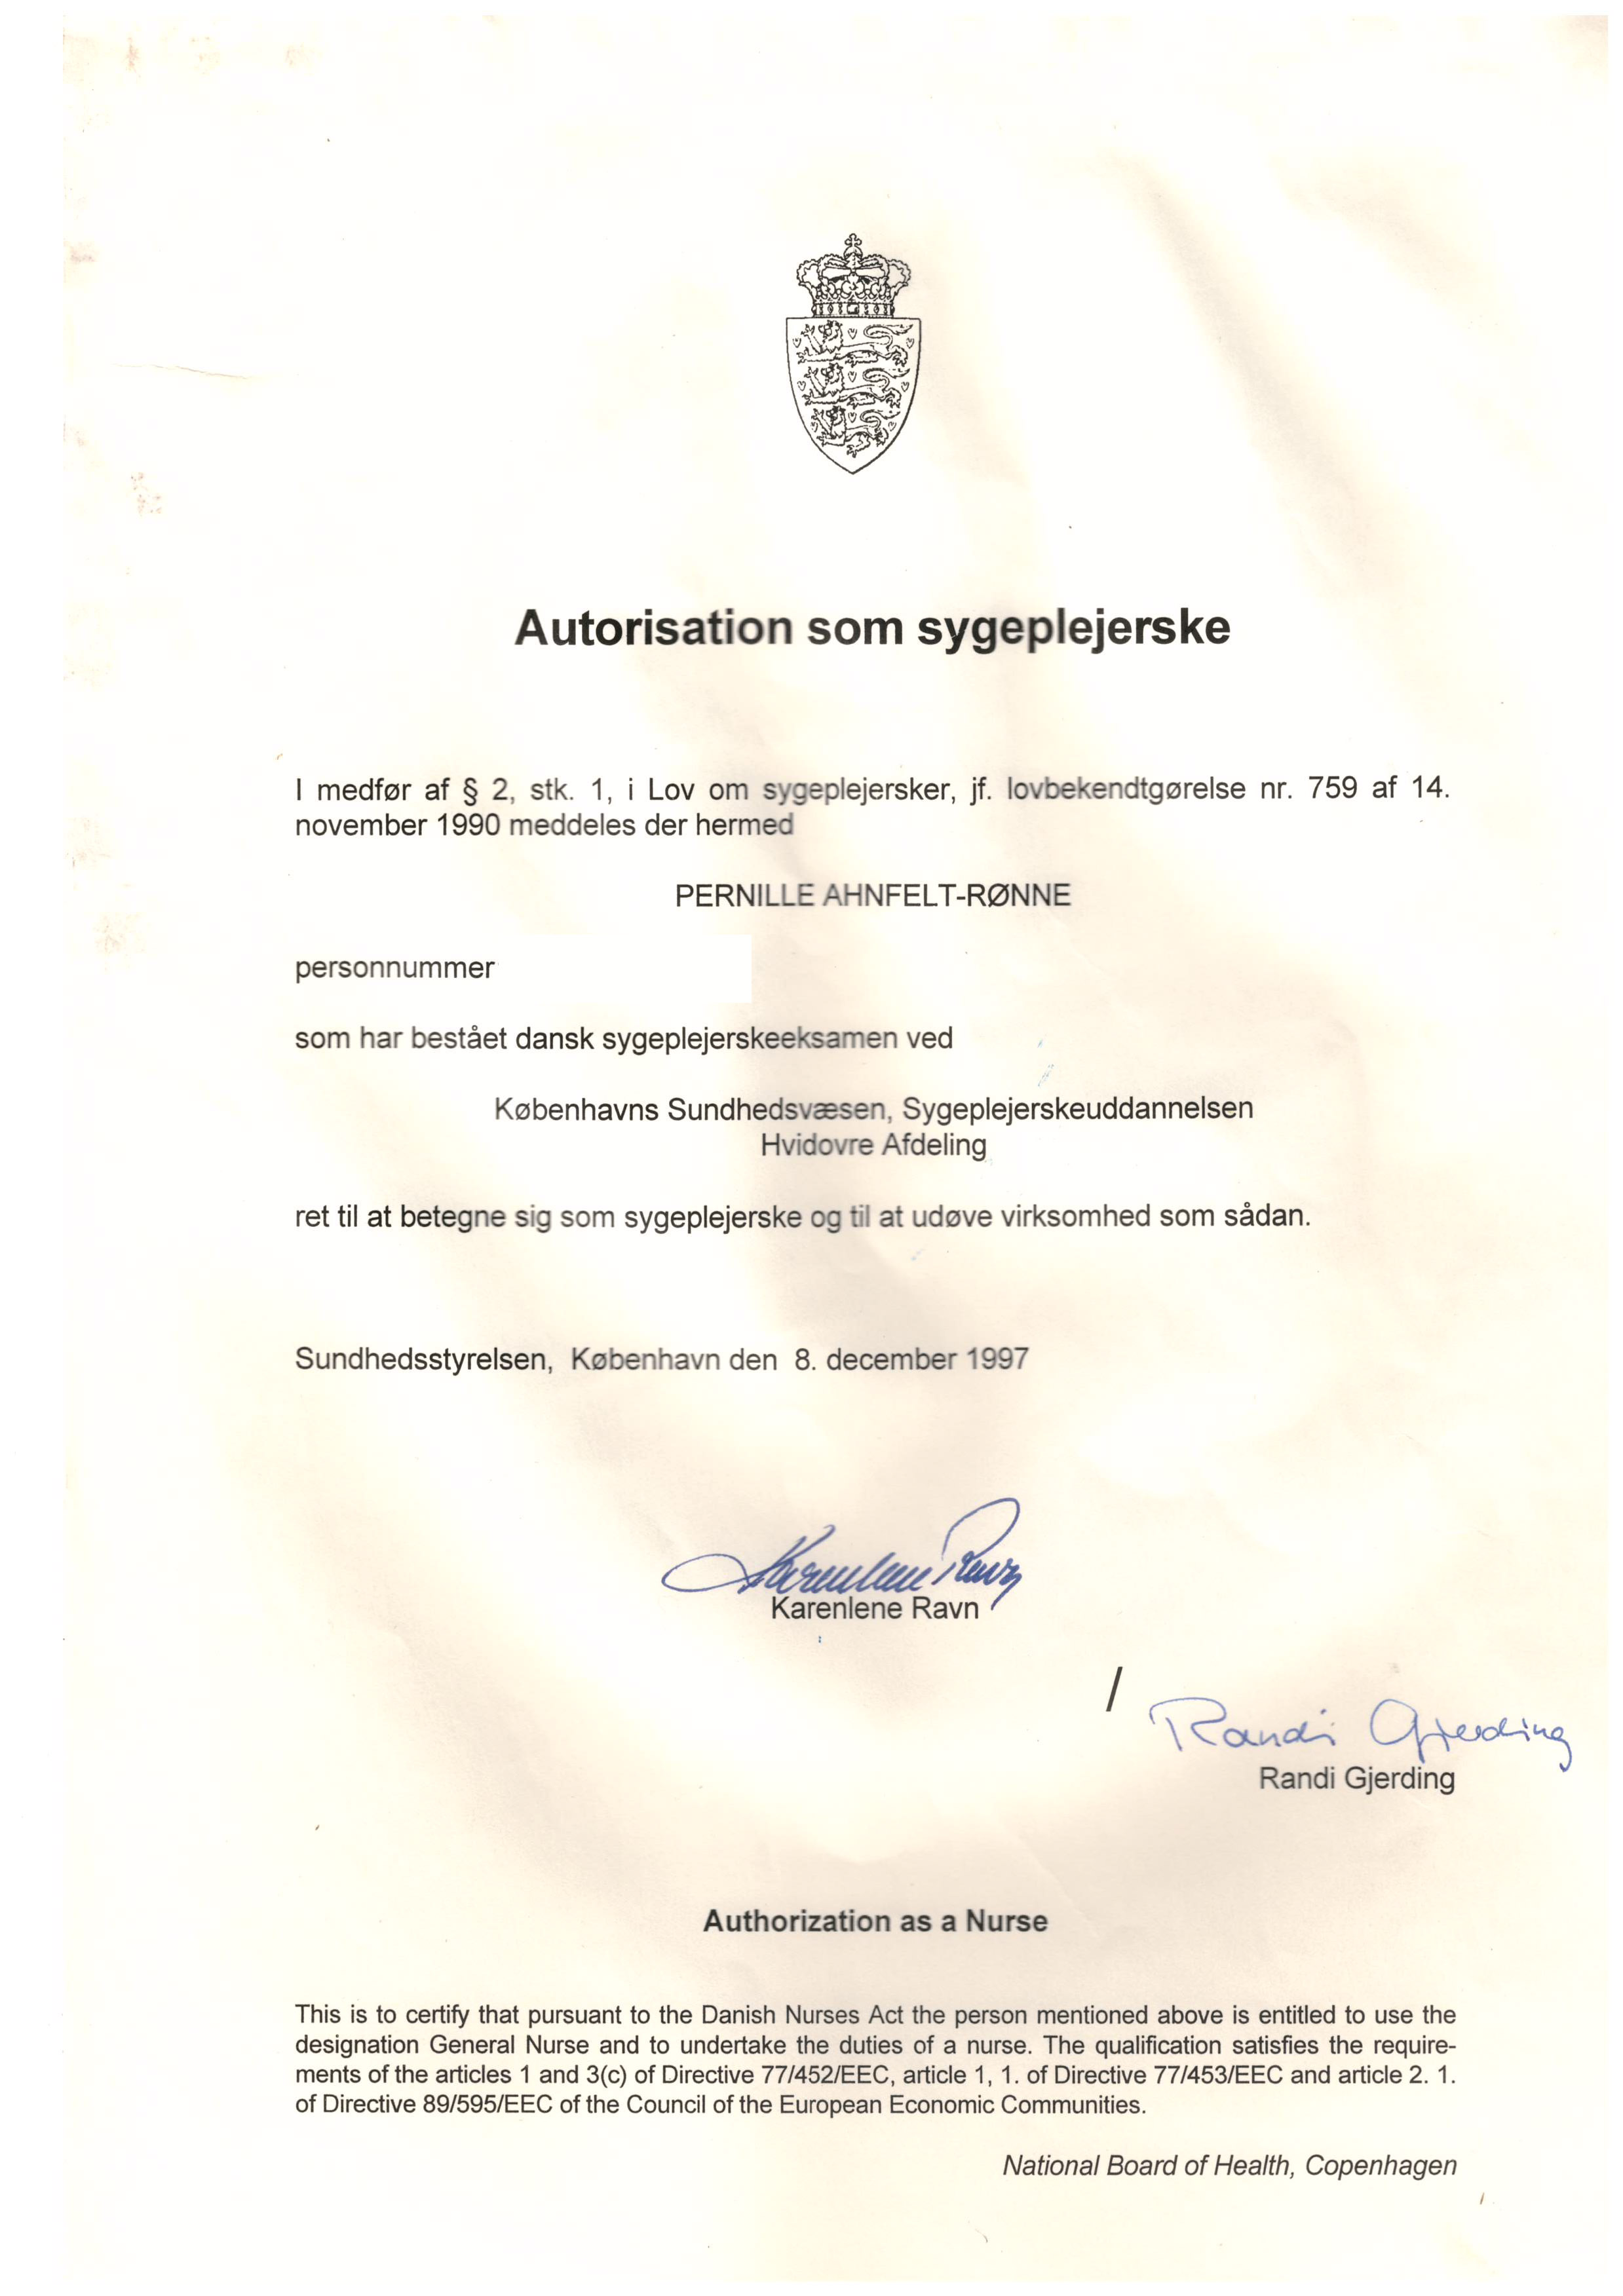 Pernilles certifikater, autorisation